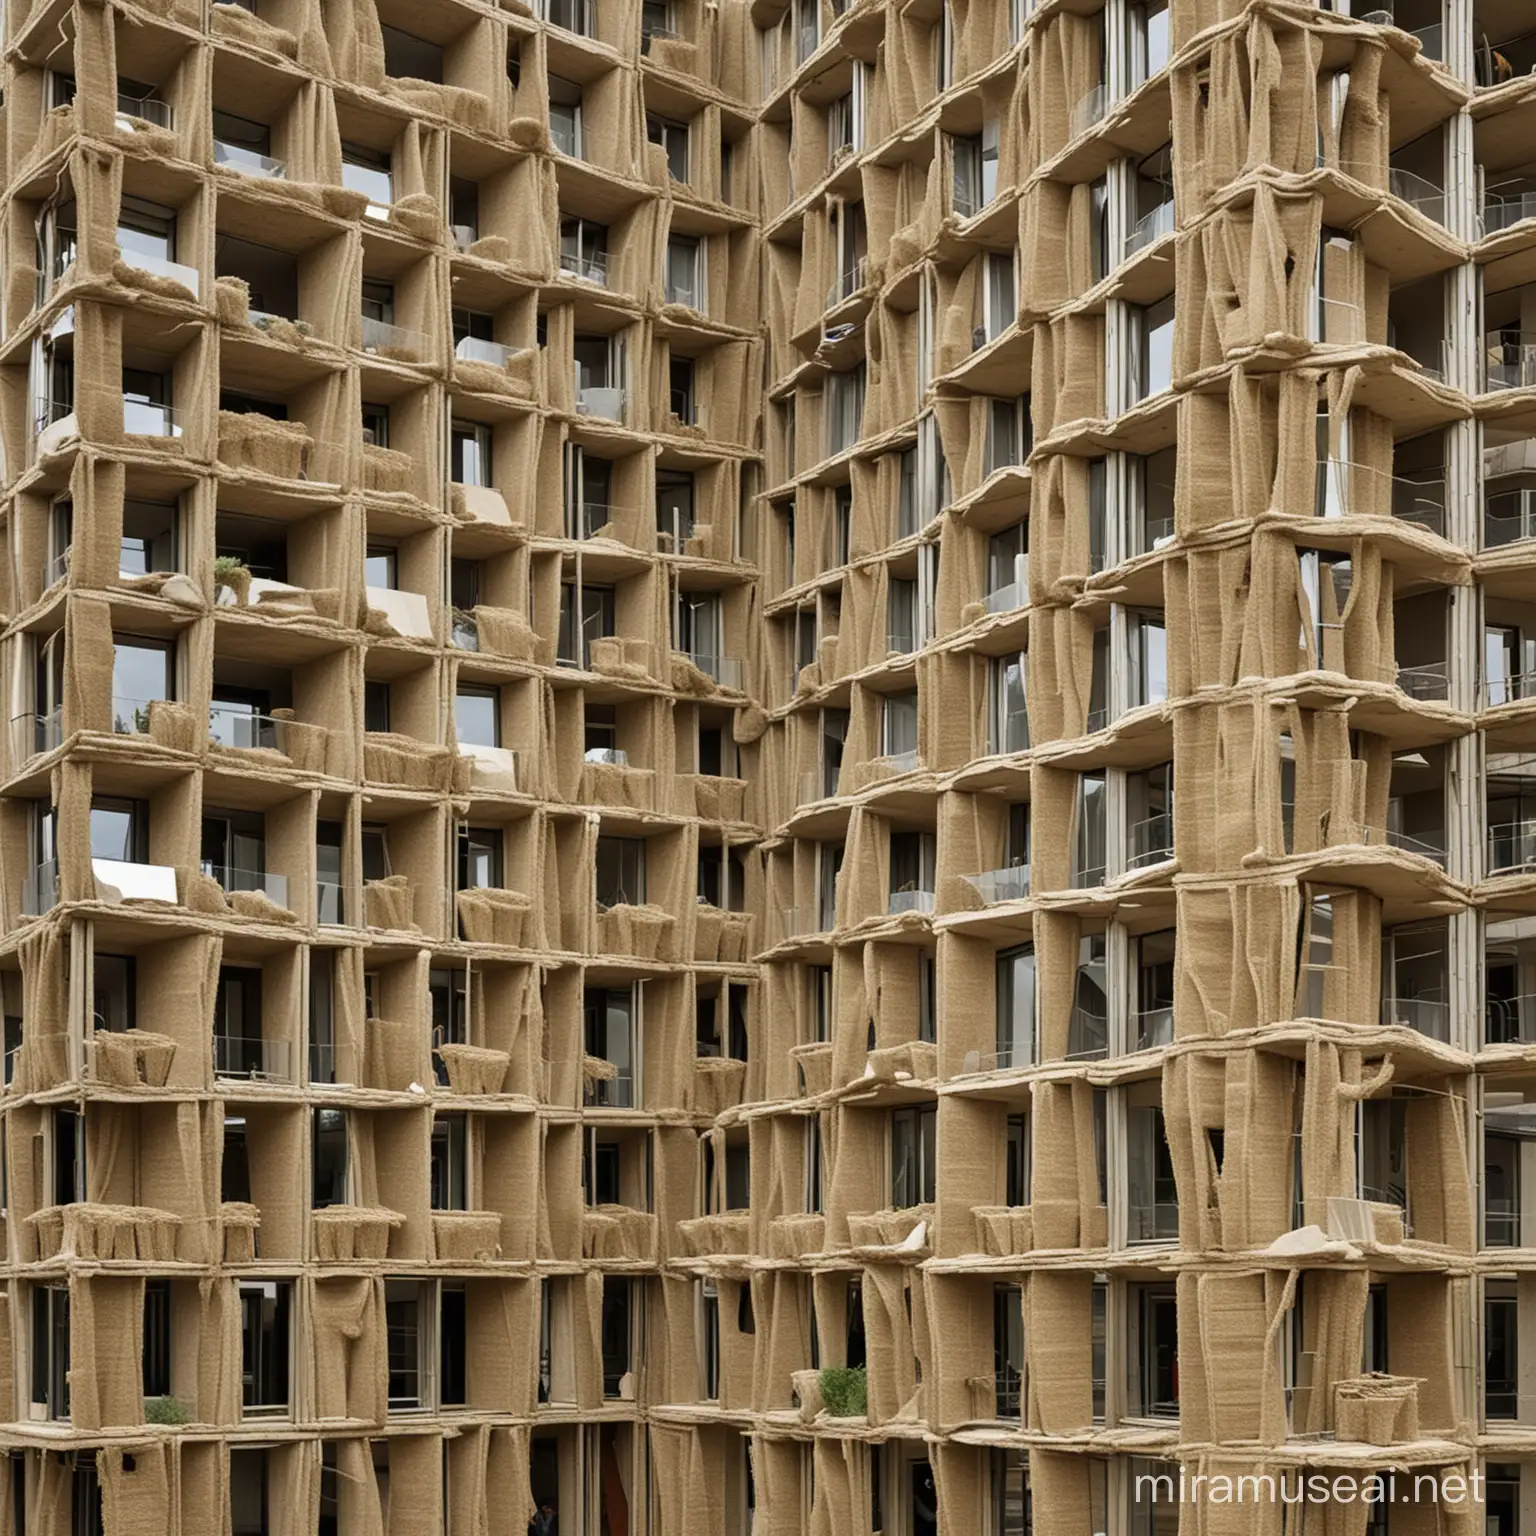 Sustainable Hemp Prefabricated Housing Panels A Vision for Postwar Environmental Crisis